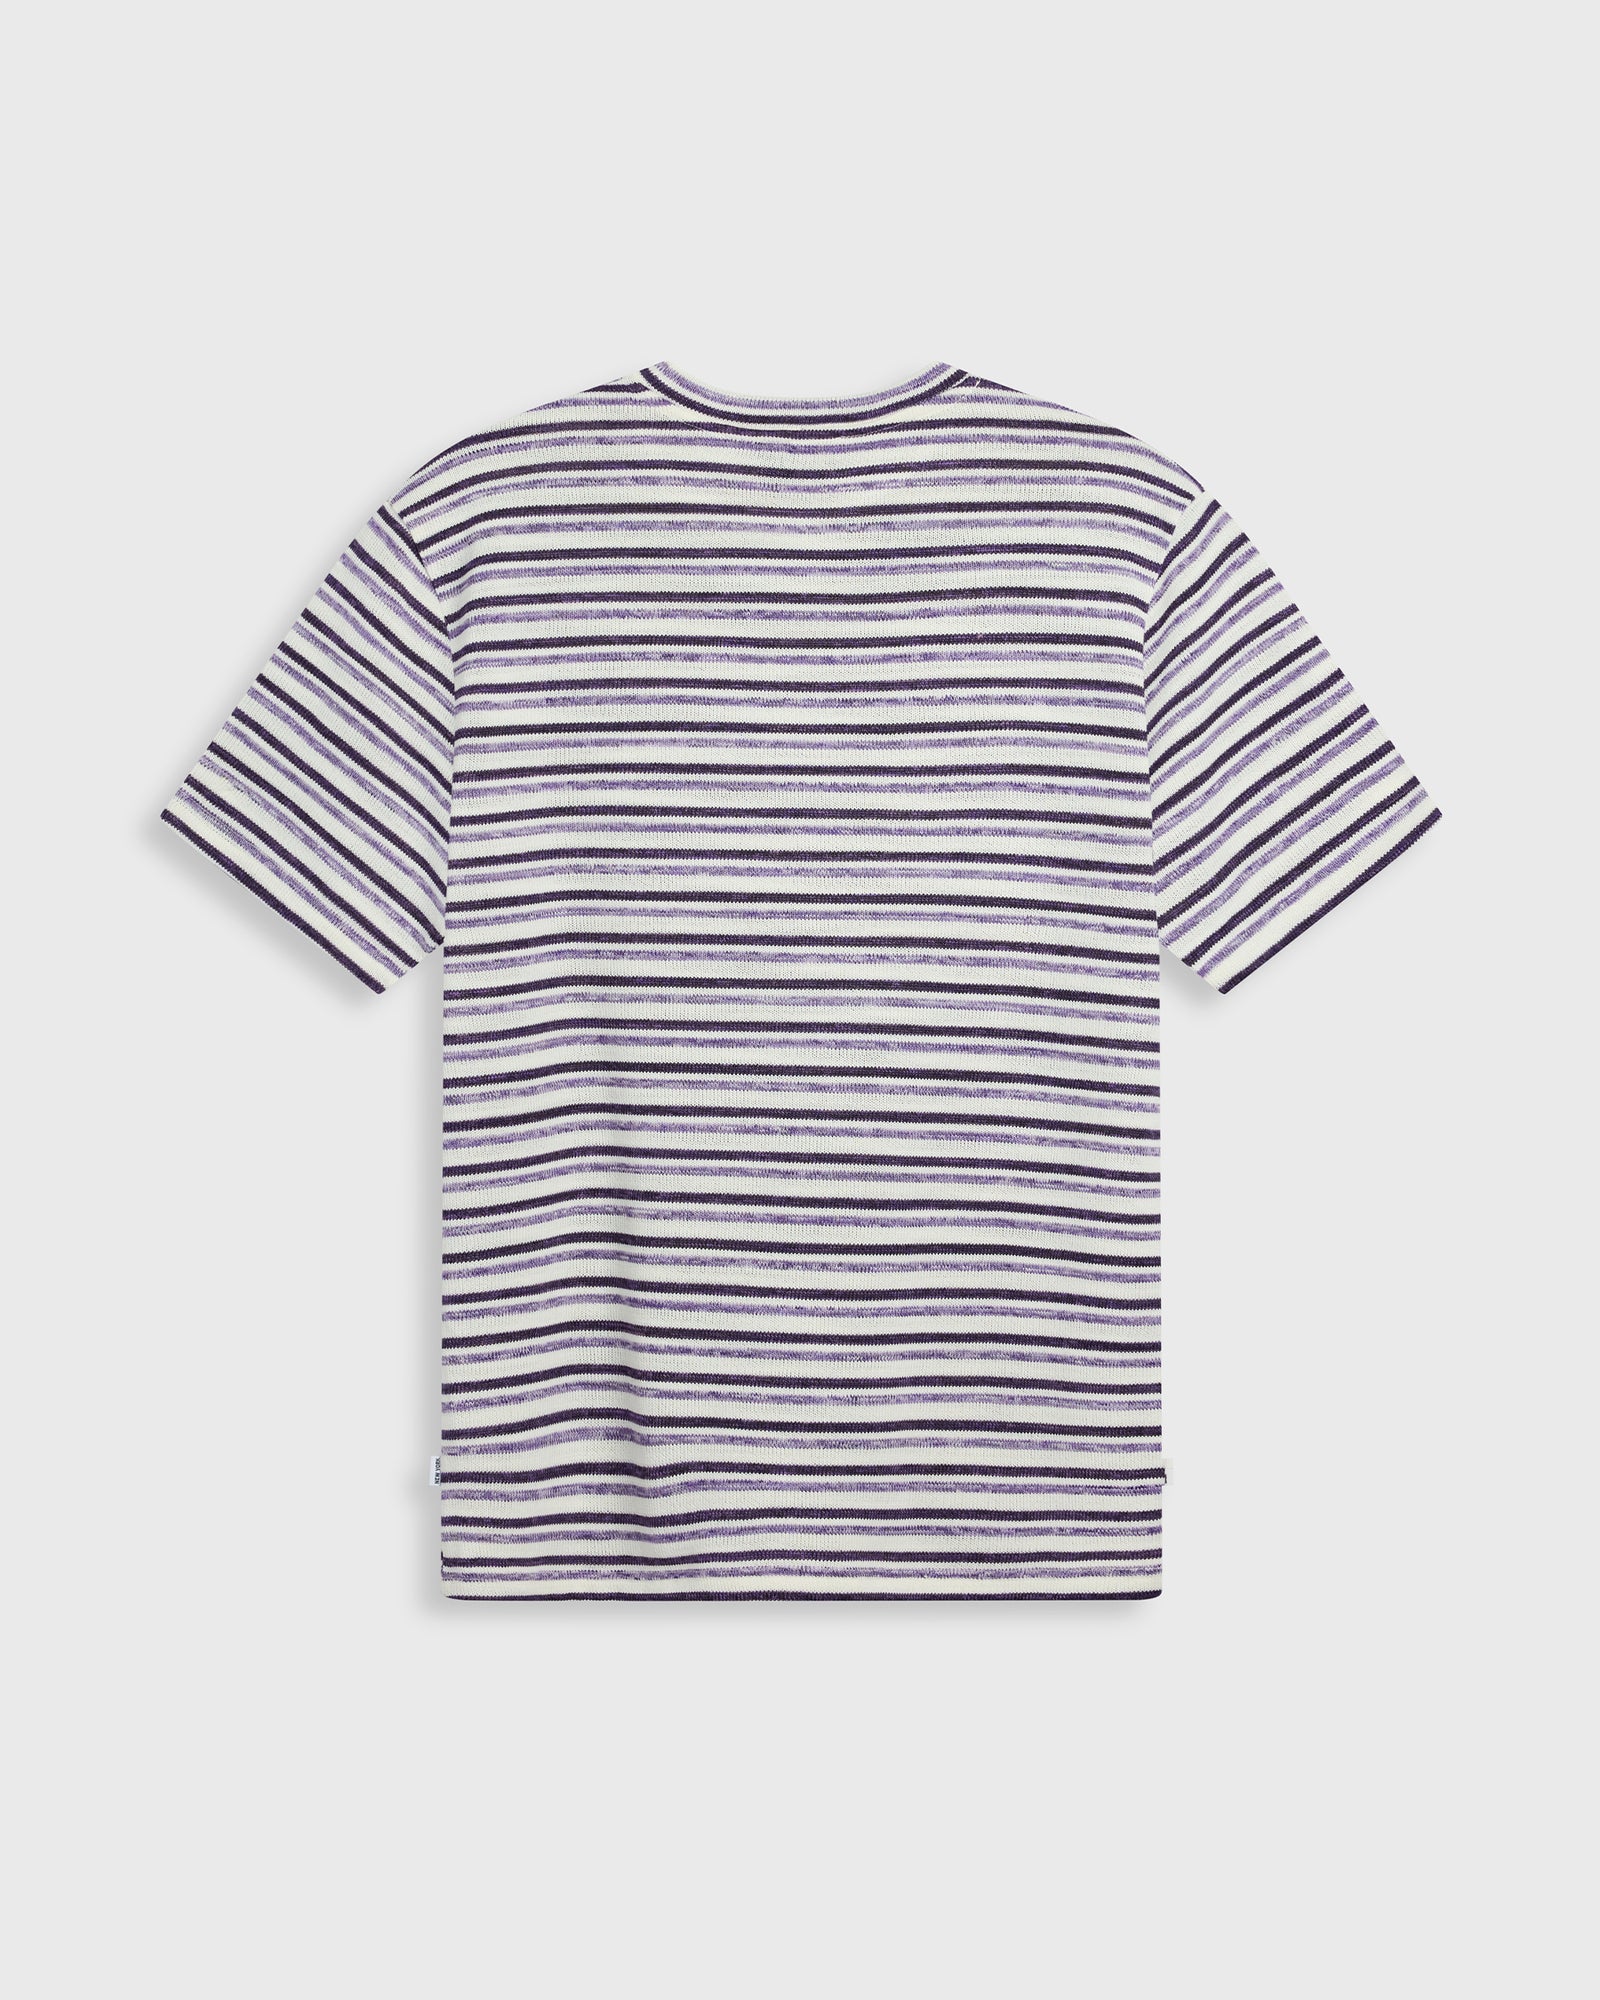 Purple, grey, white striped oversized tee shirt - unisex mens & womens designer fashion tees by Krost